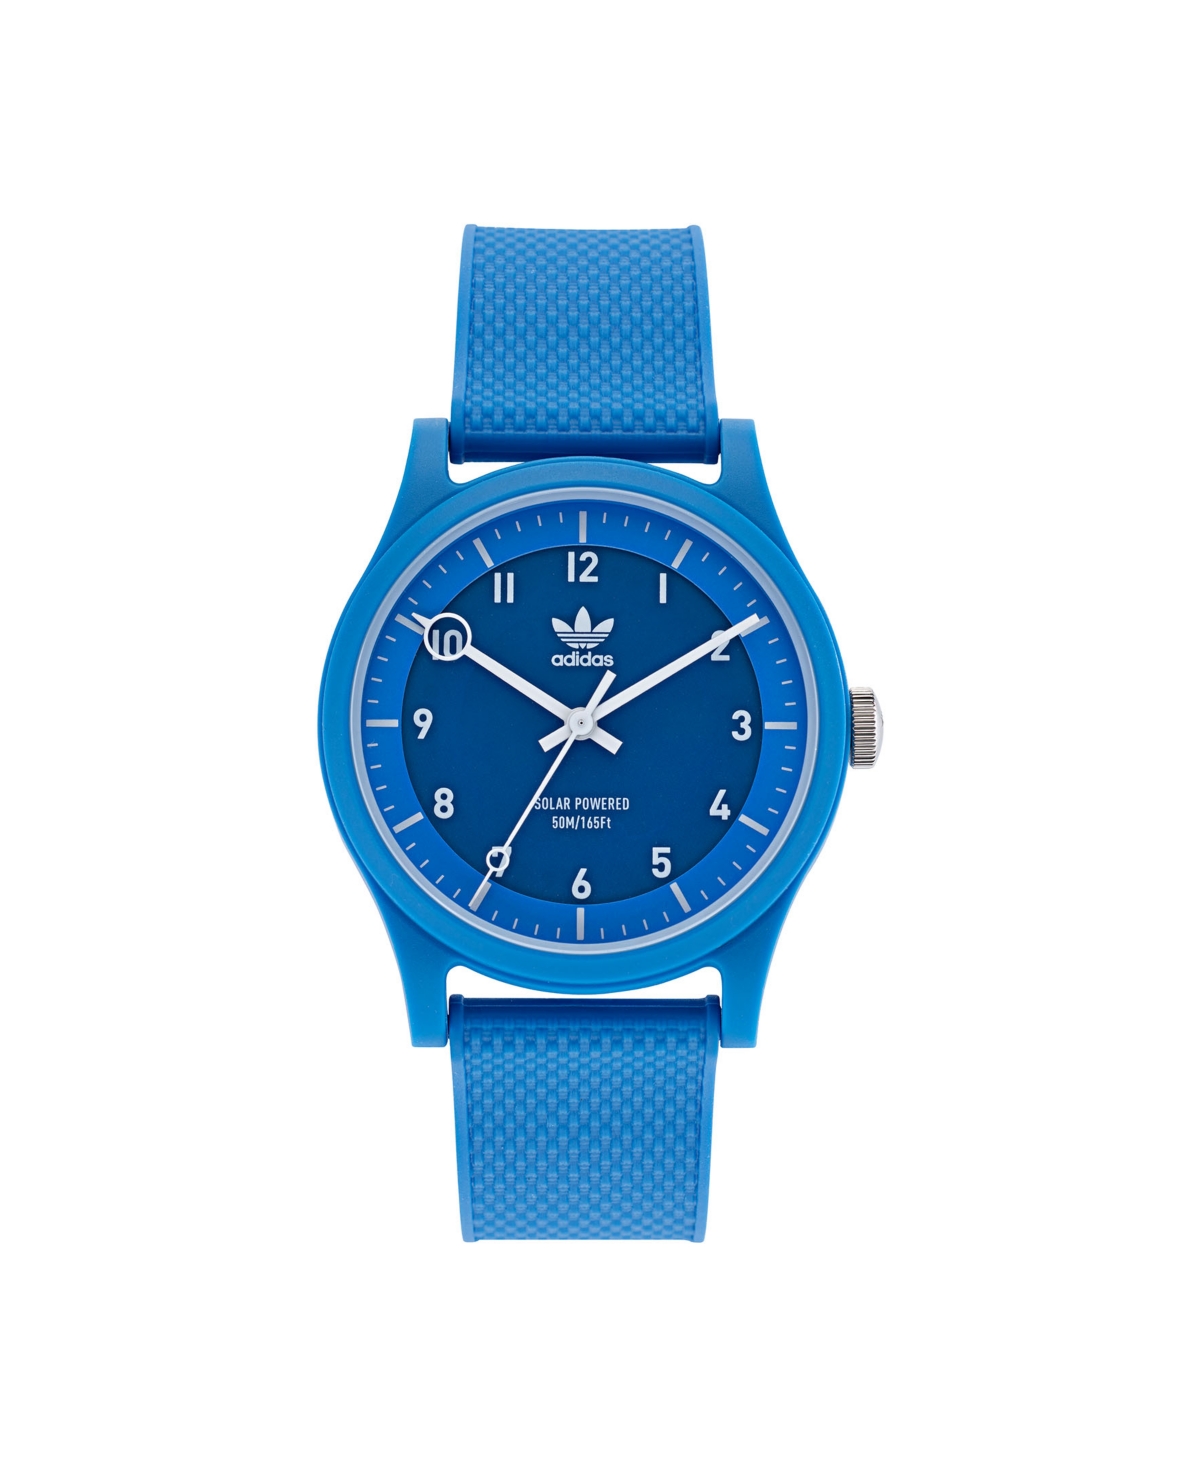 Adidas Originals Adidas Unisex Solar Project One Blue Resin Strap Watch 39mm